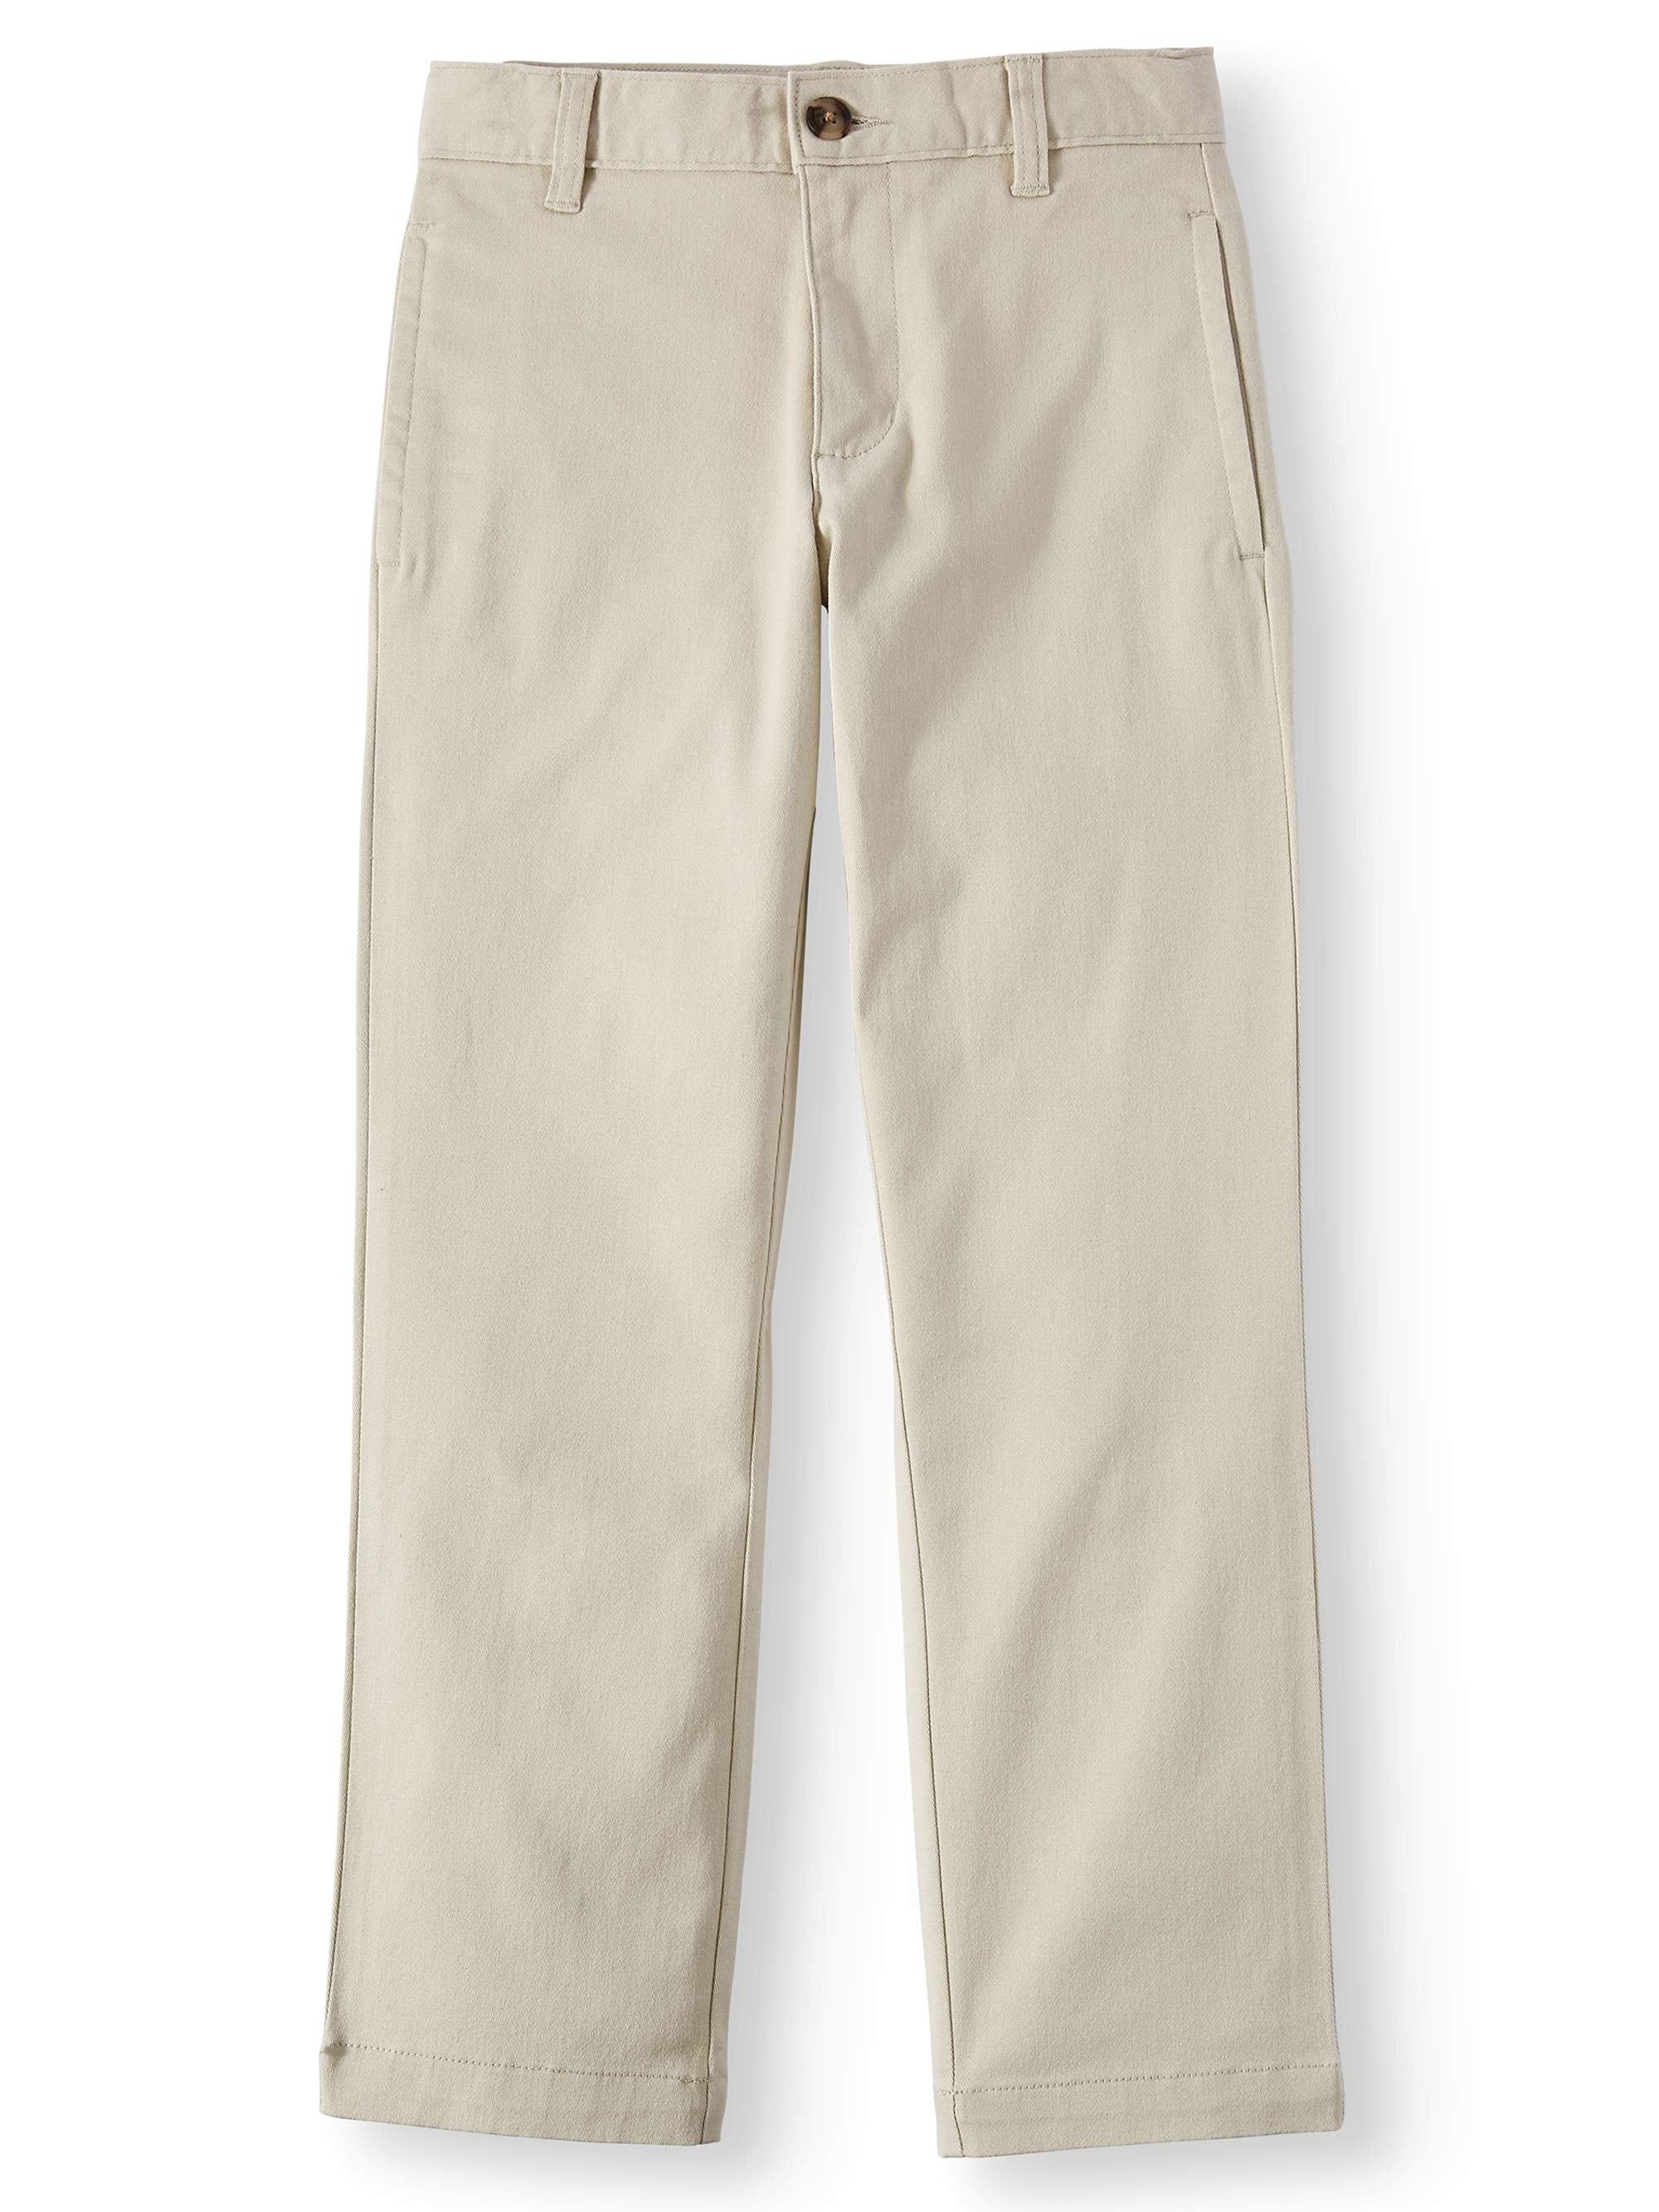 Wonder Nation Boys' School Uniform Stretch Chino Pants, Sizes 4-18, Slim & Husky | Walmart (US)